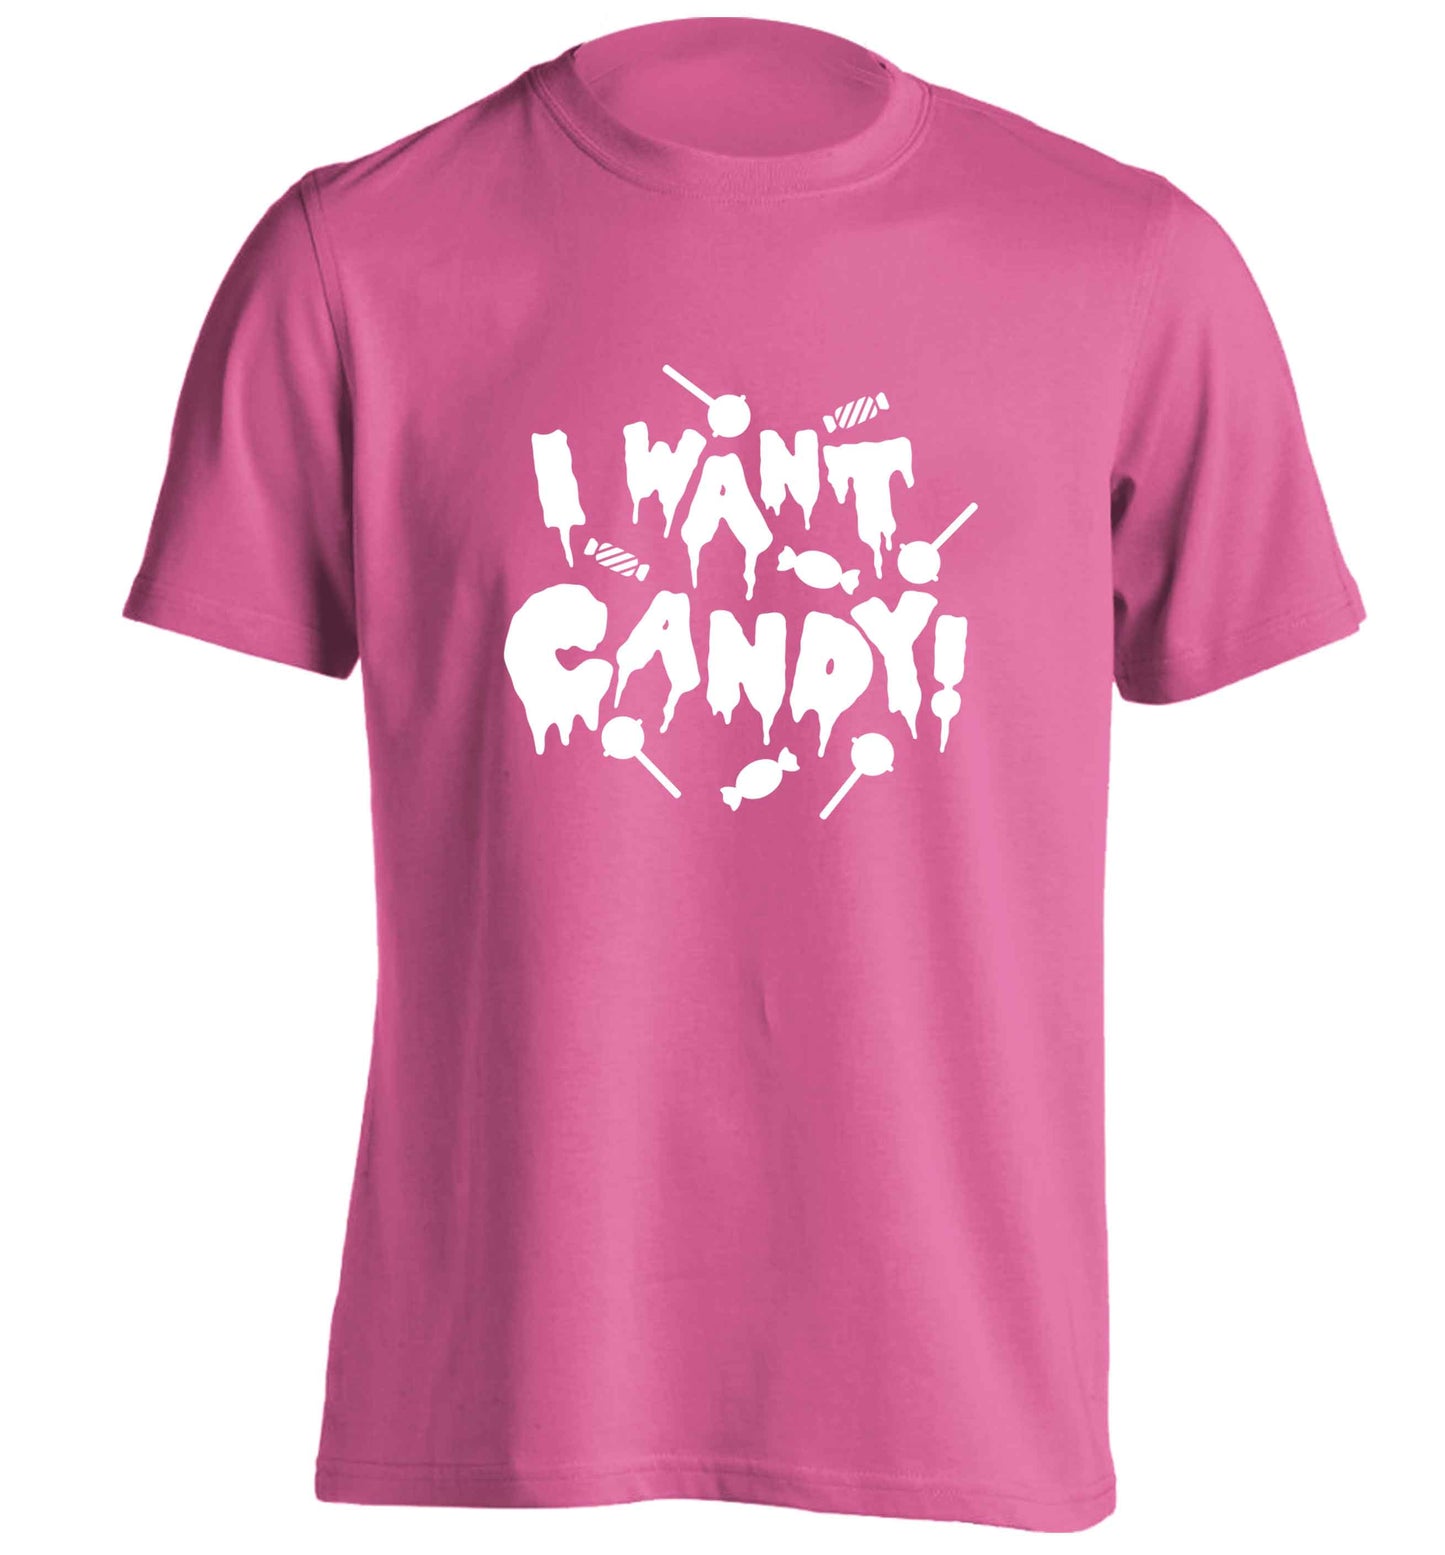 Beware this zombiecorn bites adults unisex pink Tshirt 2XL